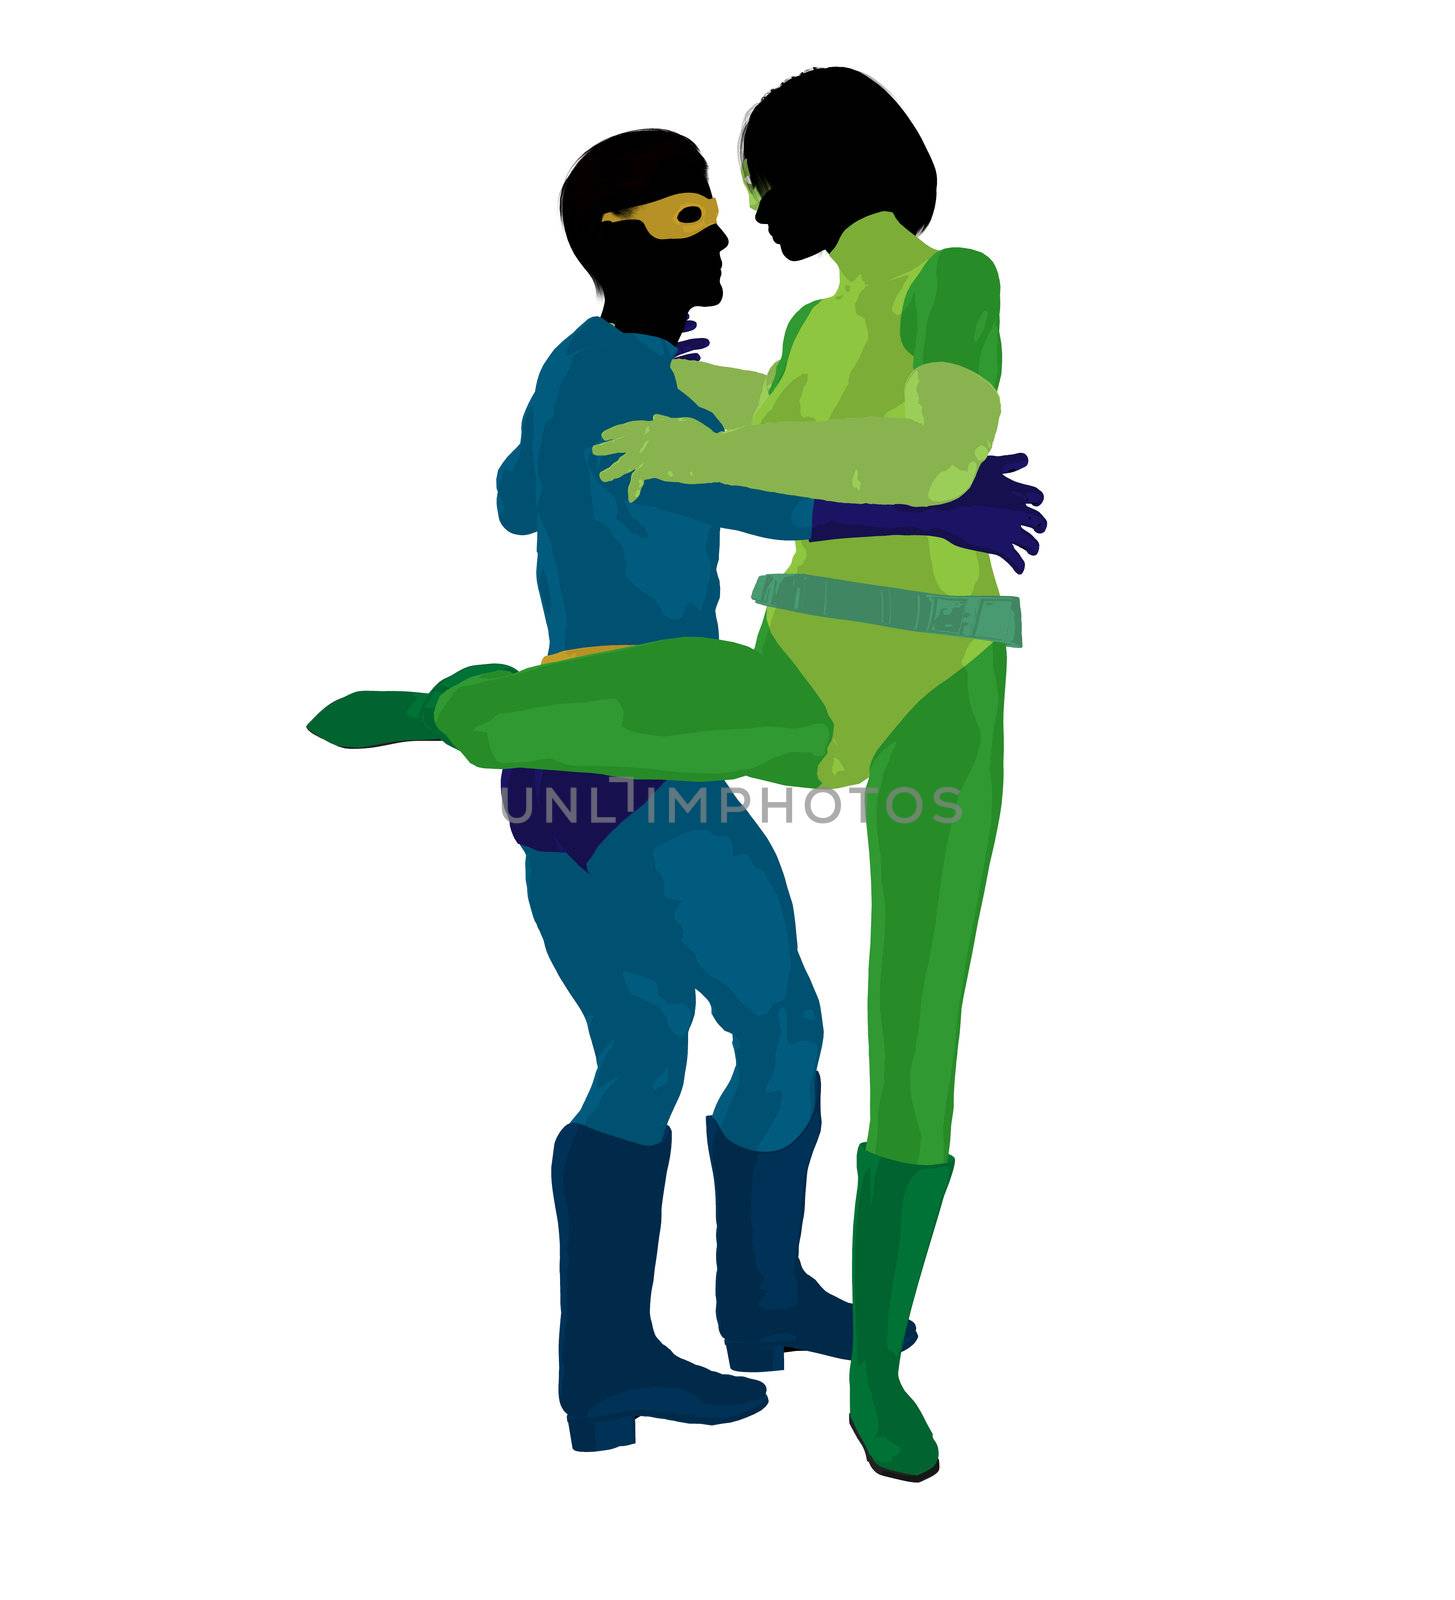 Super Hero Couple Illustration Silhouette by kathygold